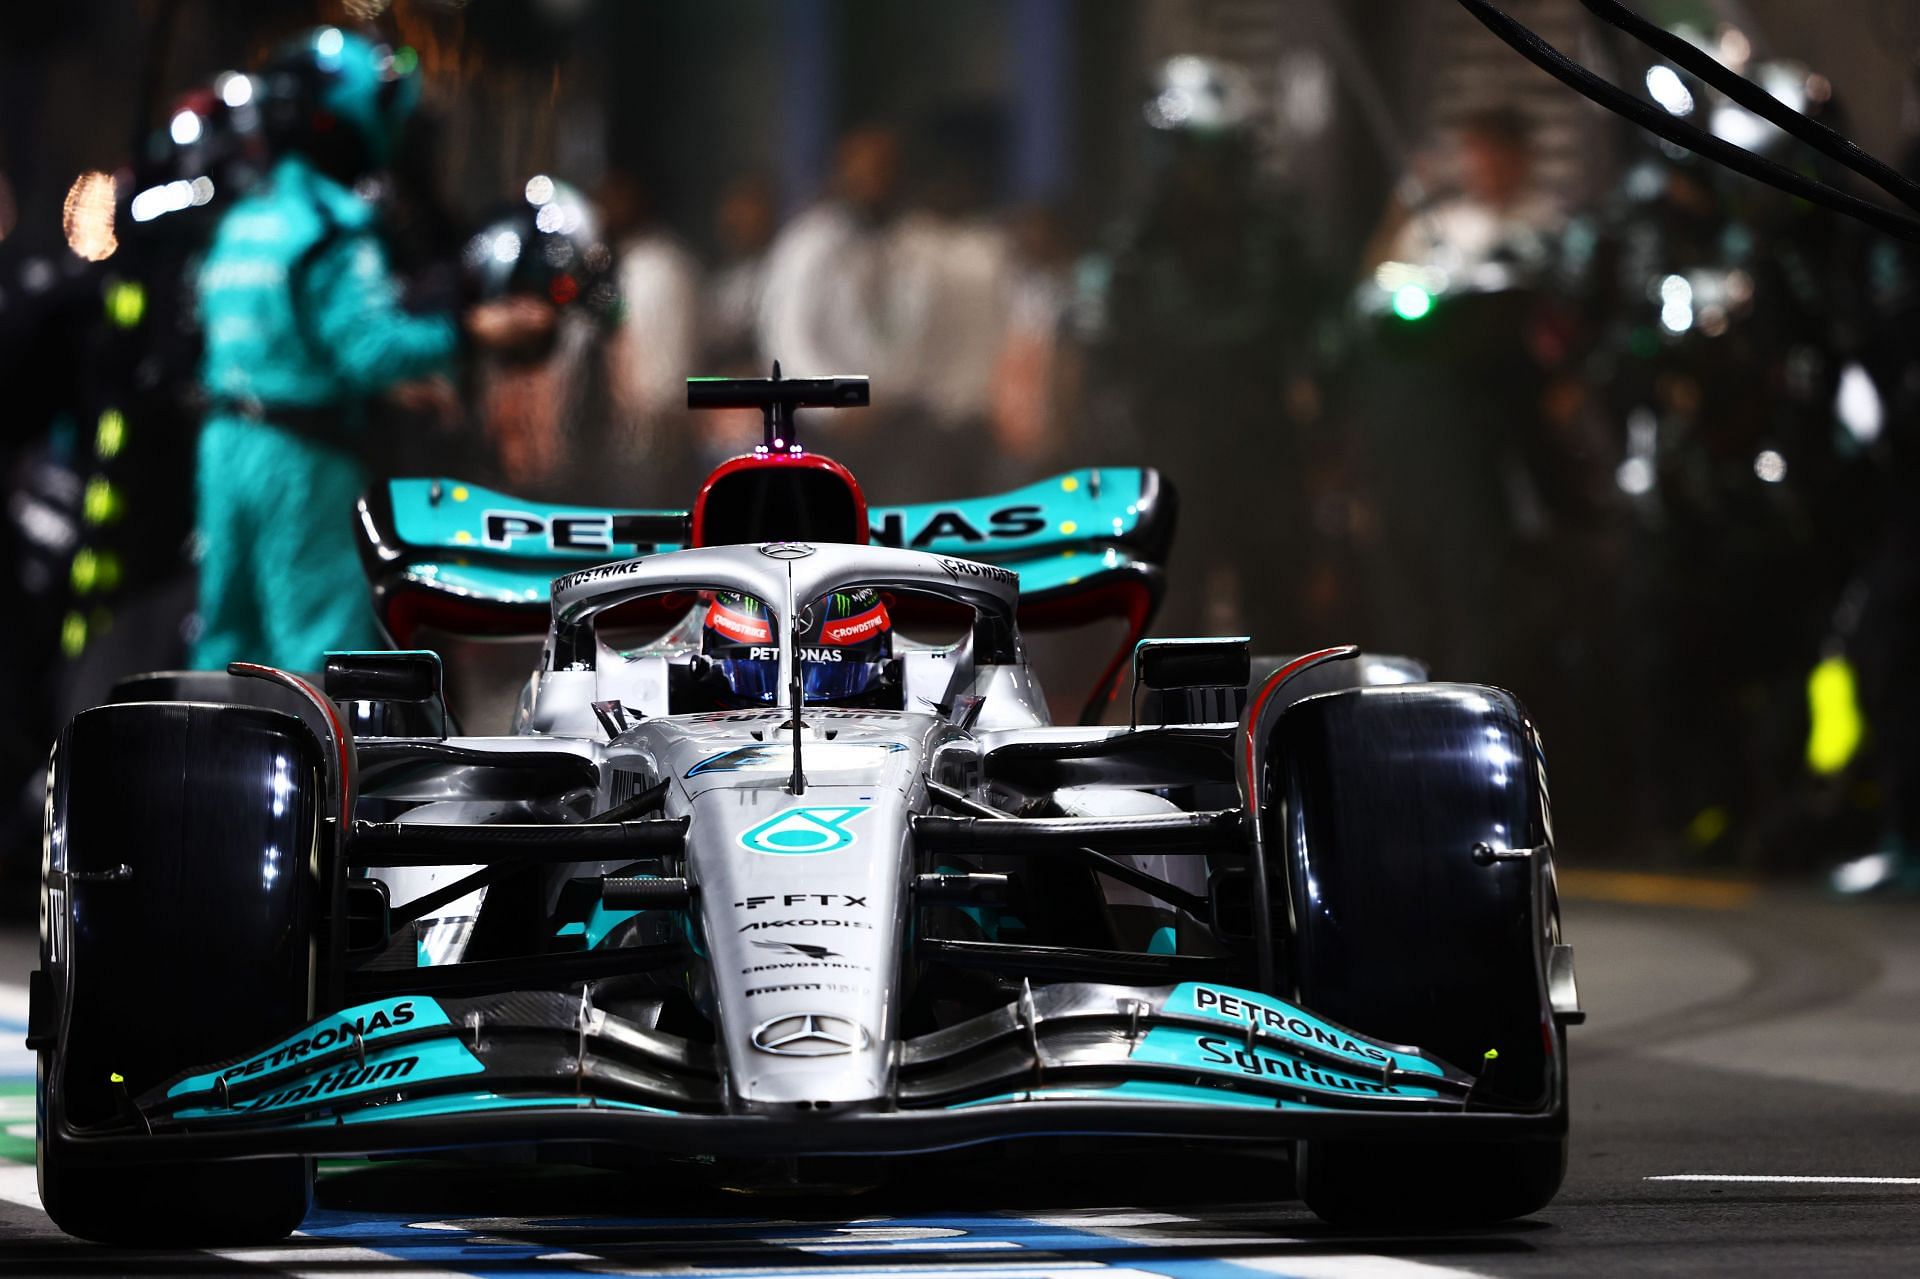 F1 Grand Prix of Saudi Arabia - George Russell leaves the pits